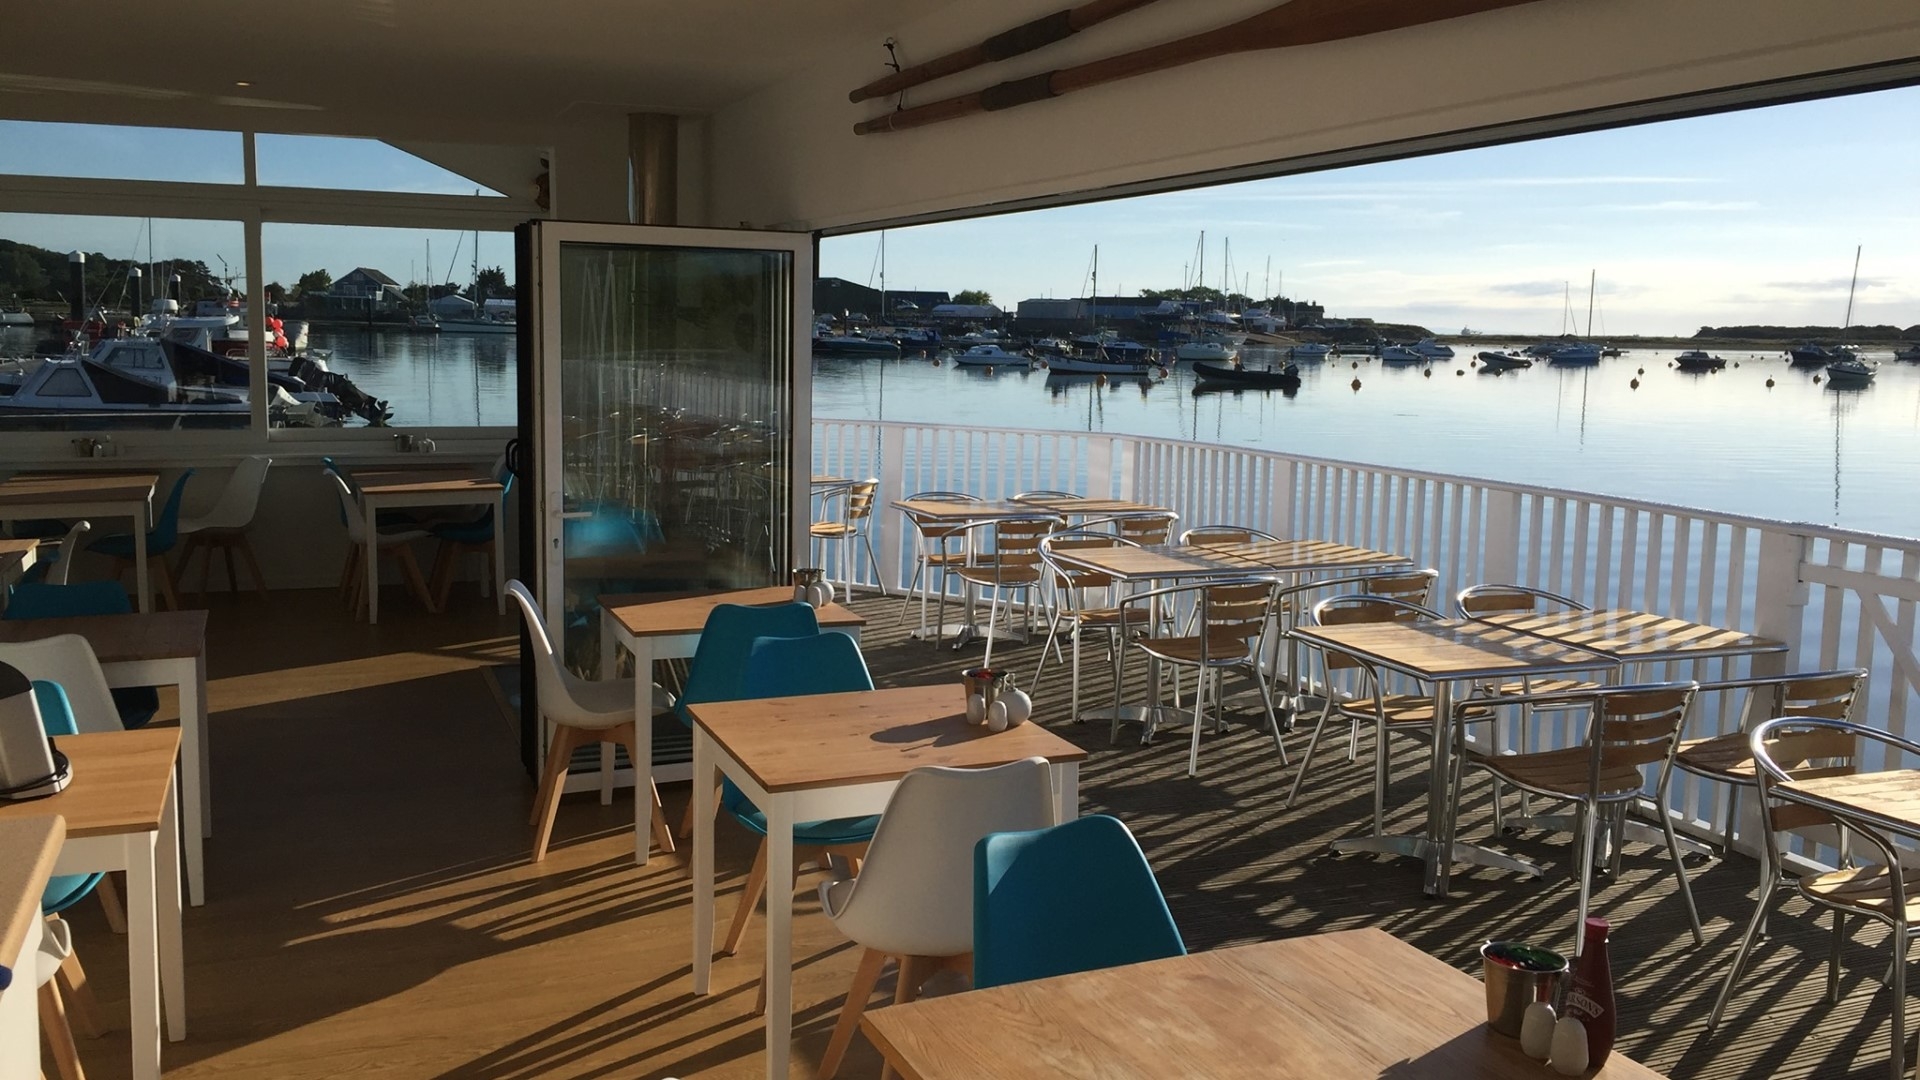 restaurant interior with tables overlooking bembridge harbour